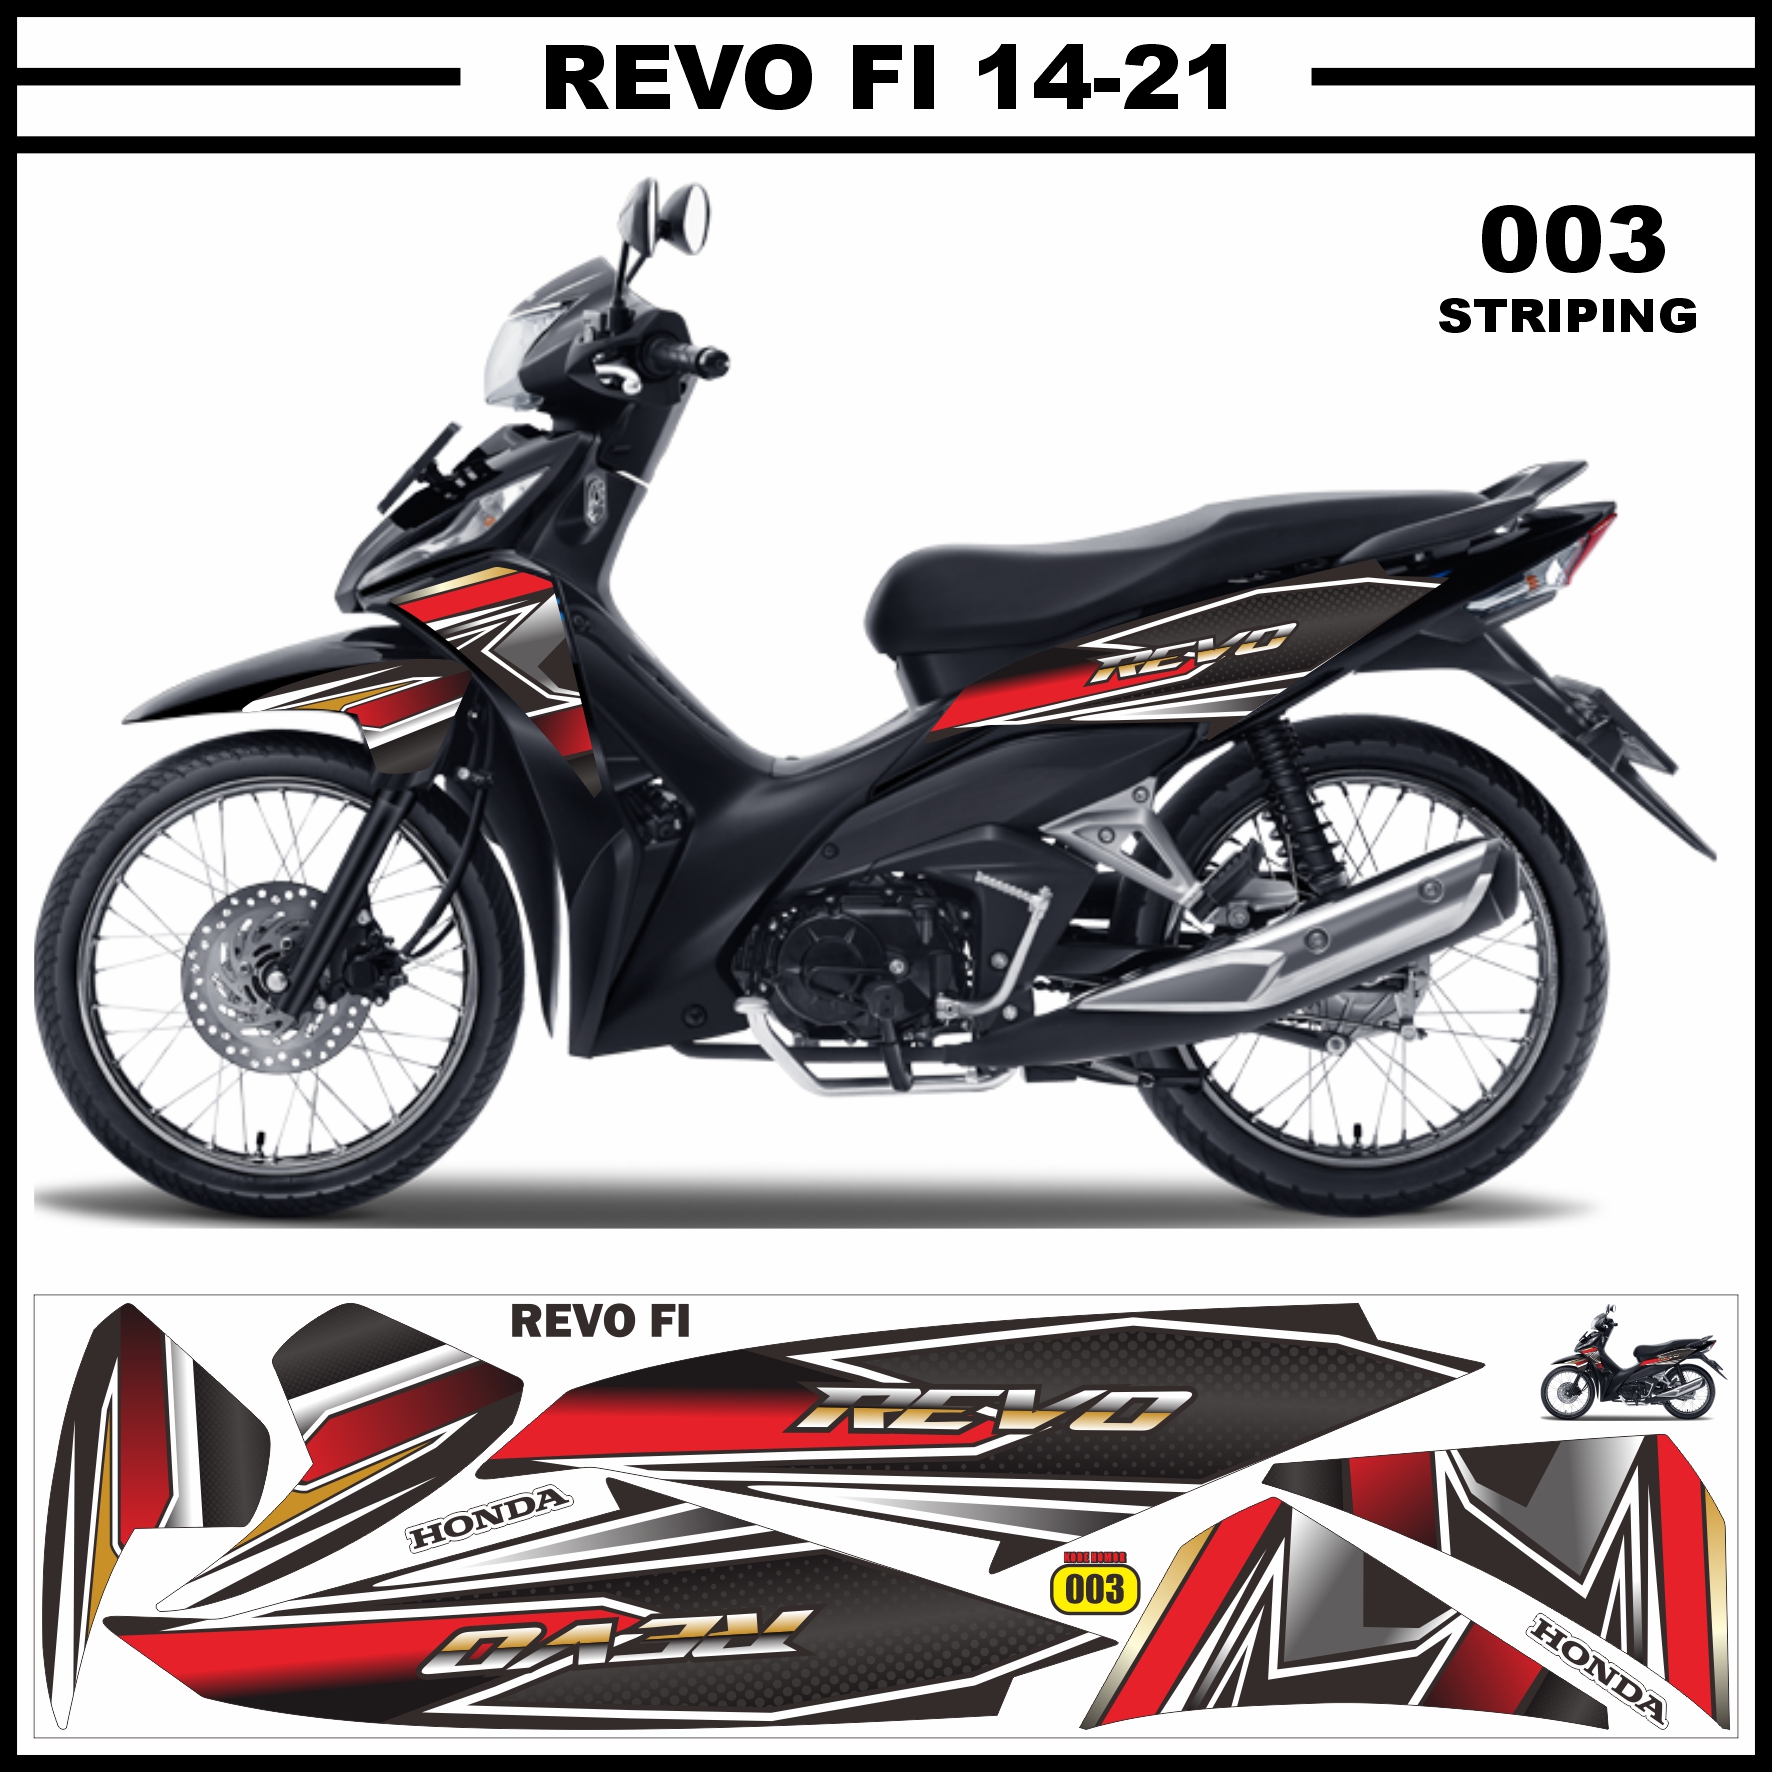 Decal Striping Honda Revo Fit FI 2014 2021 Variasi Grafis 003 FL1 Arlio Stiker Lazada Indonesia